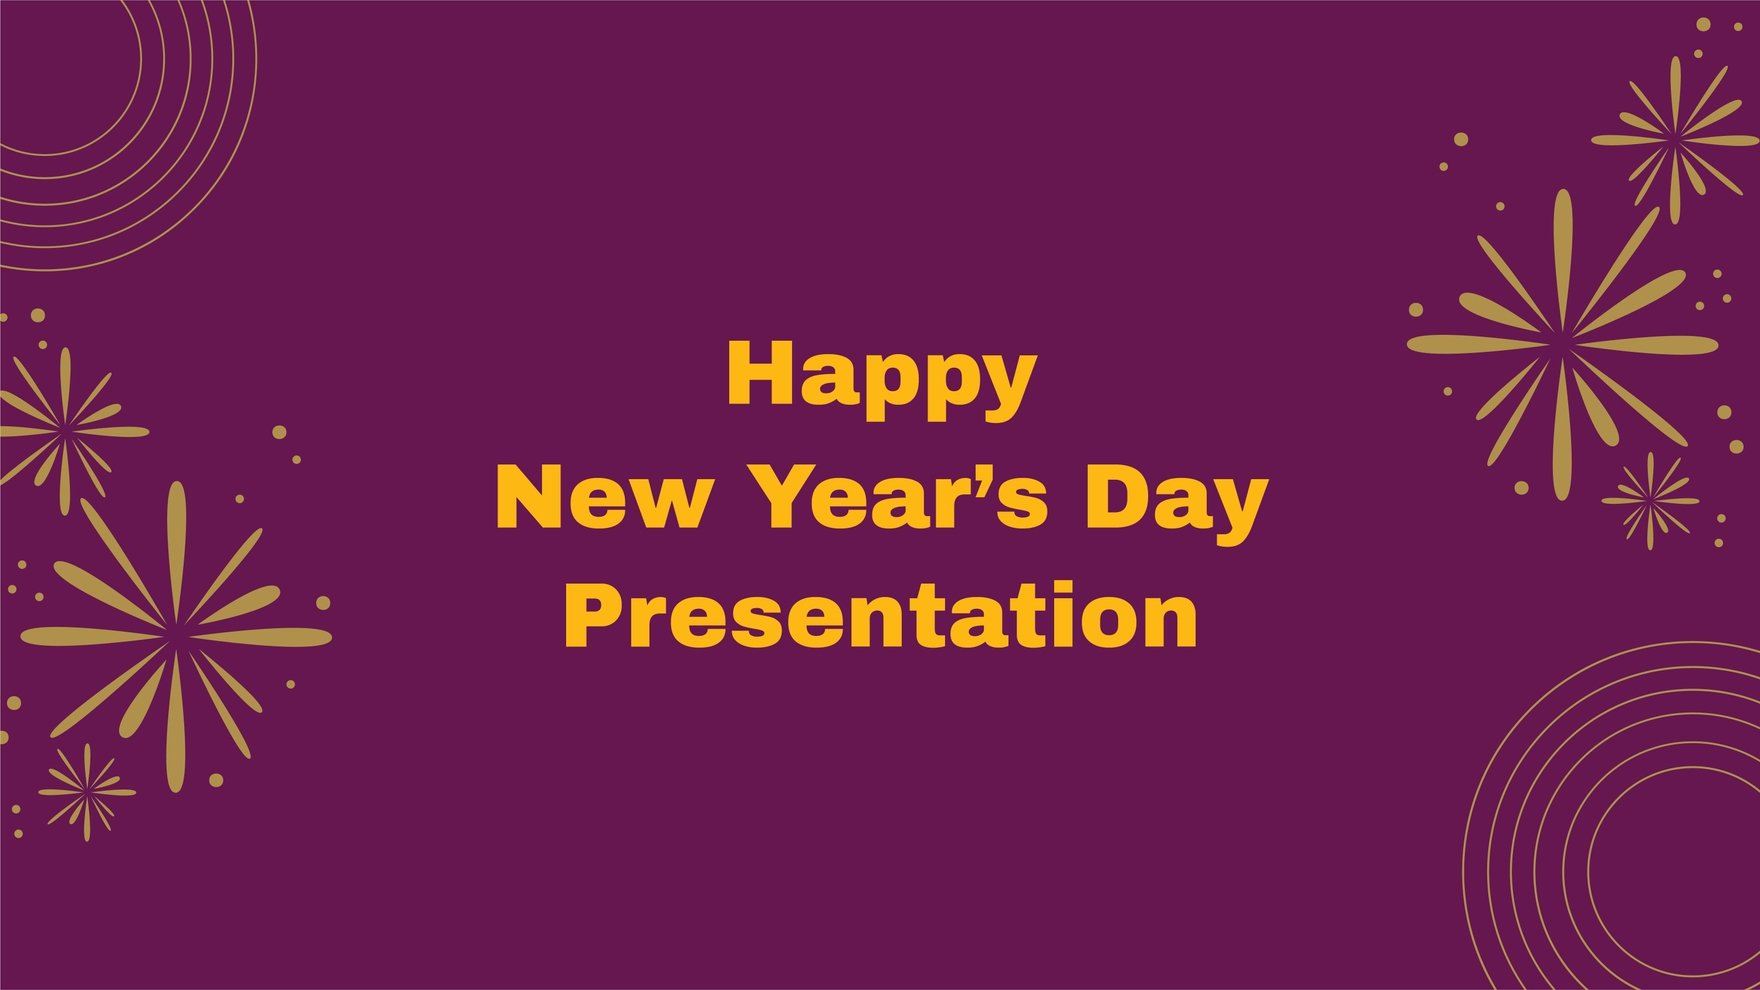 Happy New Year's Day Presentation